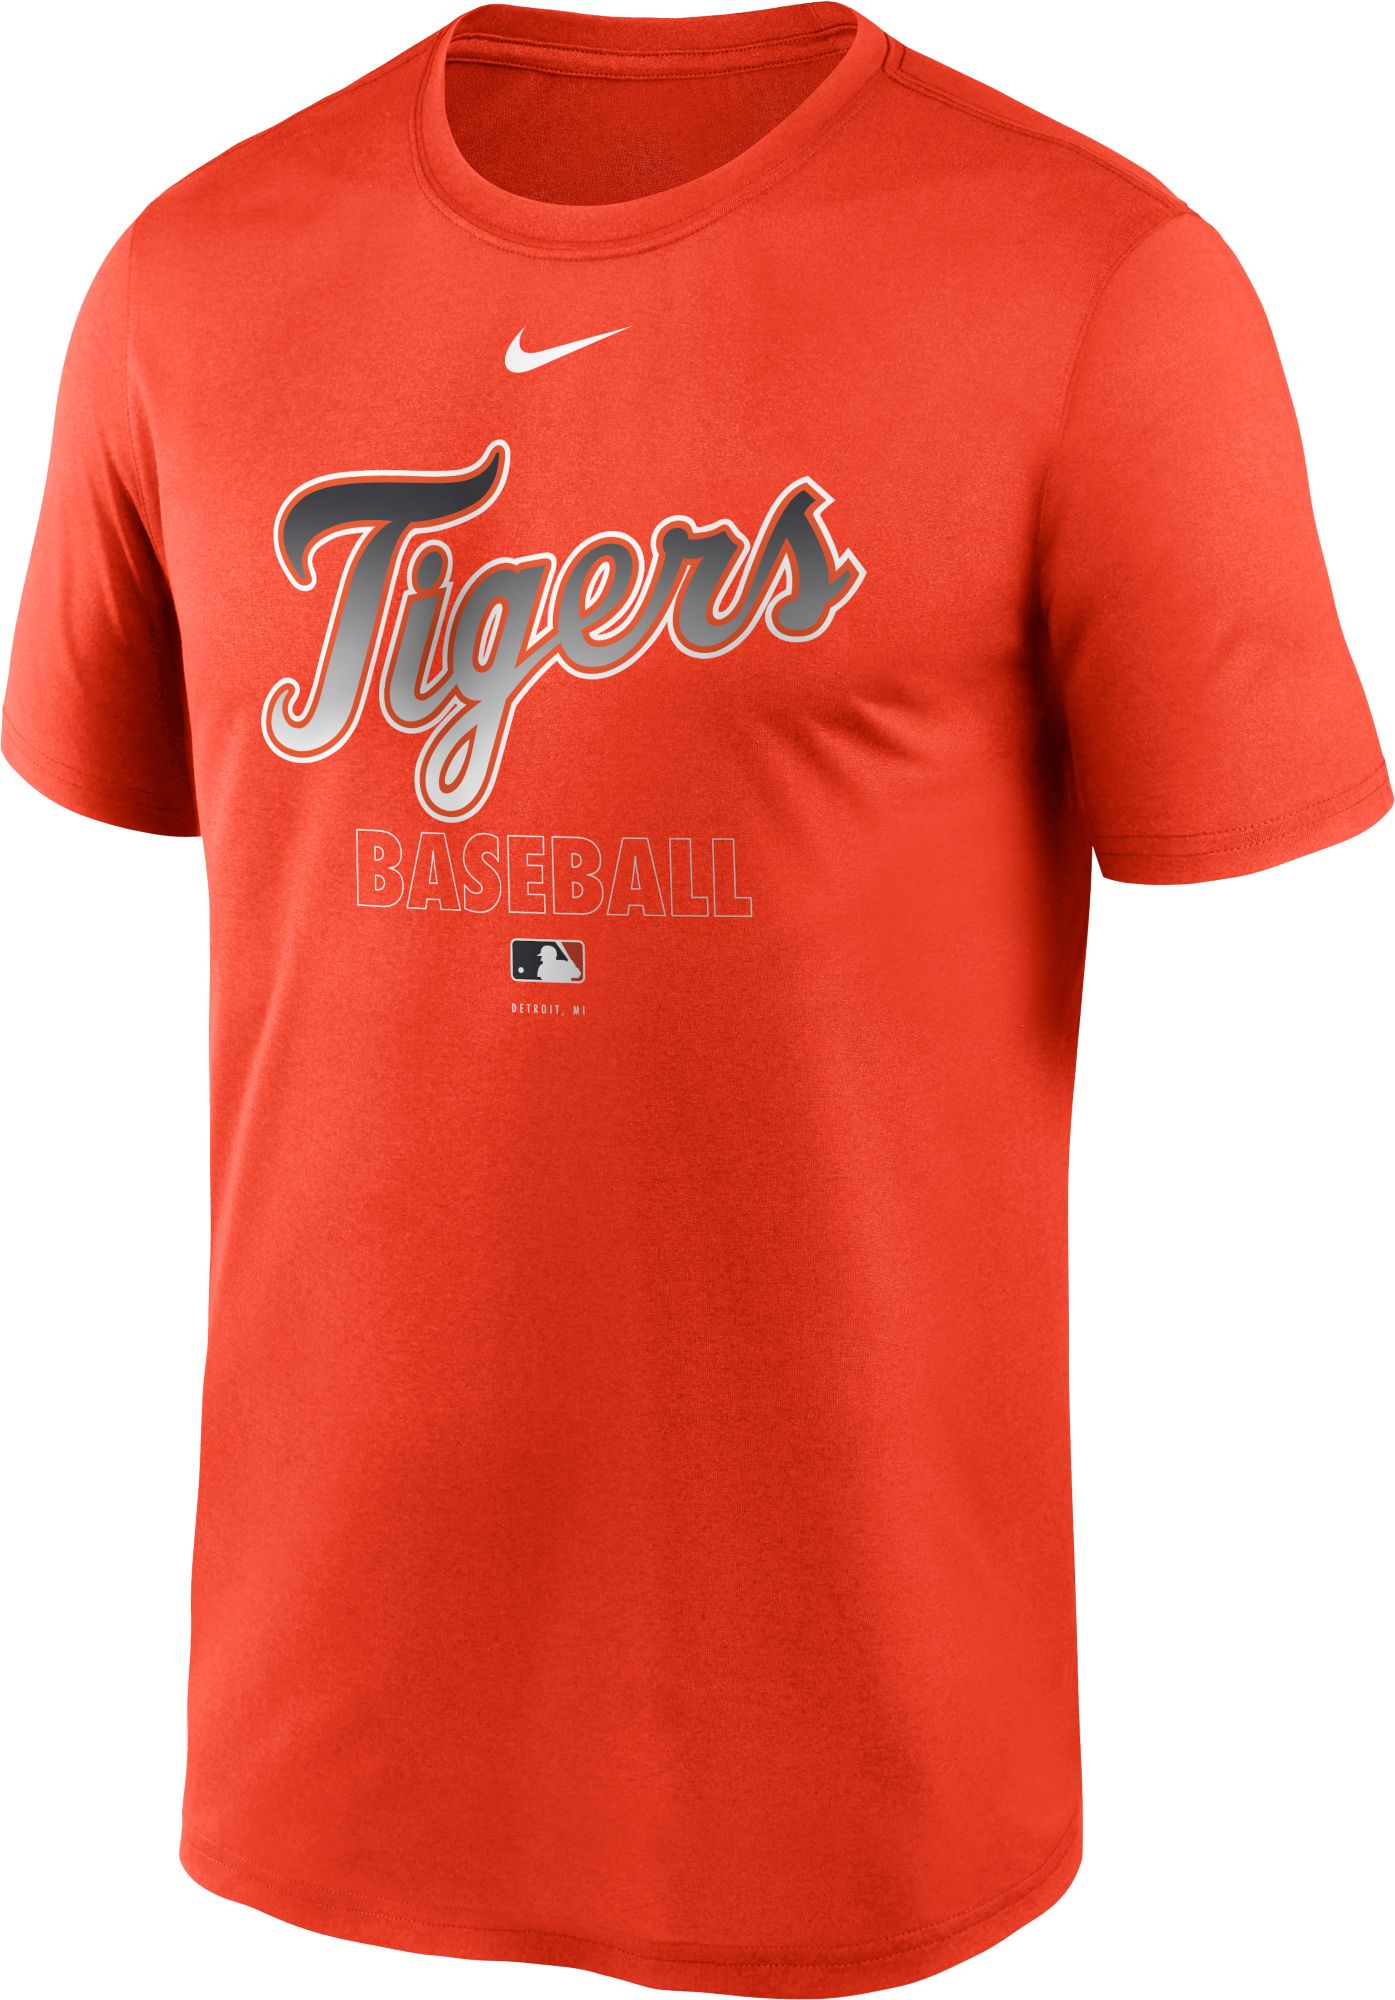 detroit tigers nike shirt